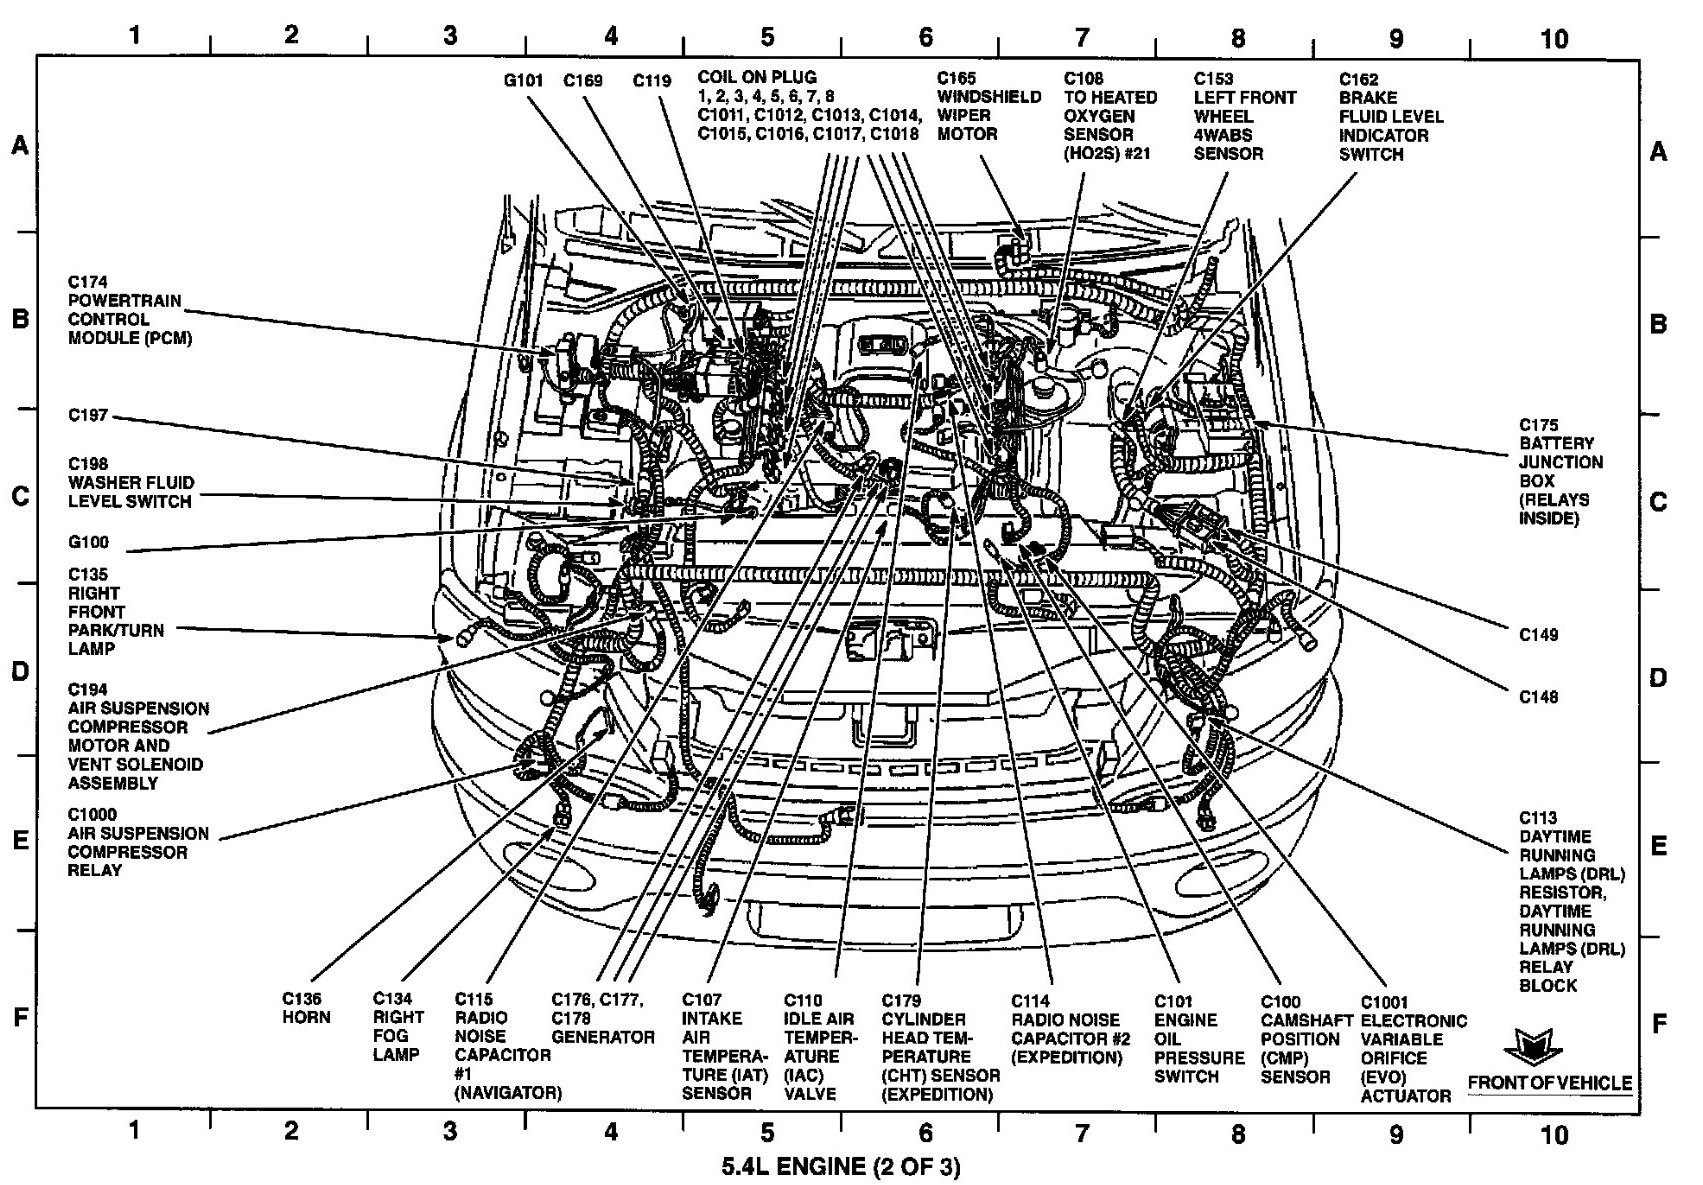 2008 Bmw 328i Engine Parts Diagram 1997 Bmw 528i Engine Diagram Wiring Diagram Motorcycle Of 2008 Bmw 328i Engine Parts Diagram